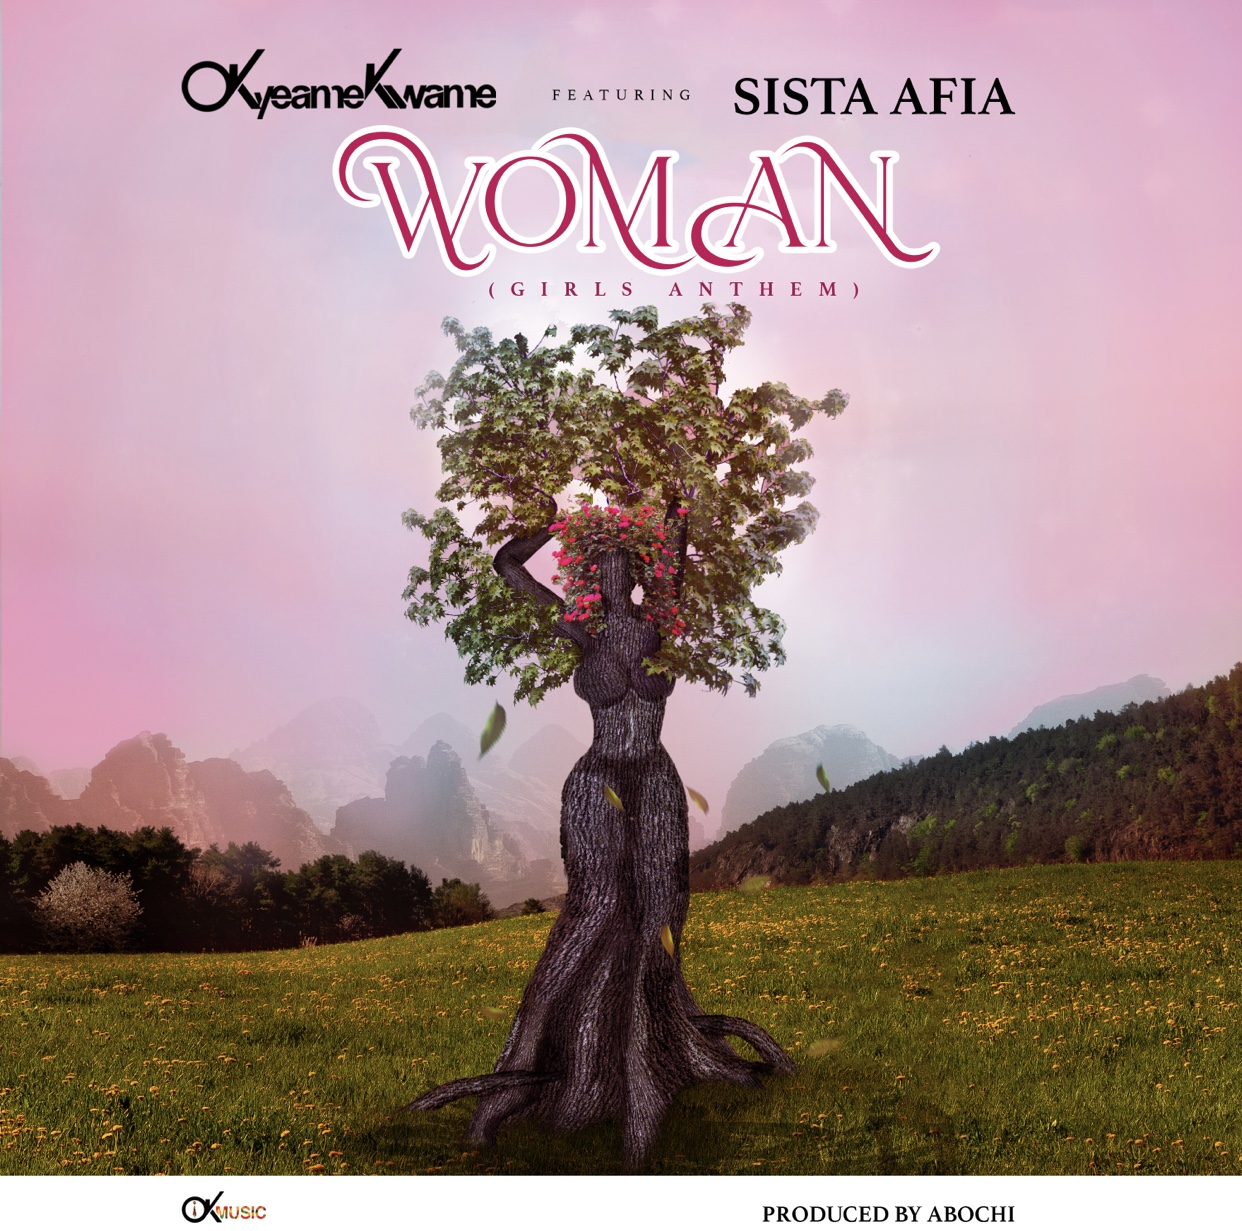 Okyeame Kwame features Sista Afia on new song ‘Woman’ [Audio]